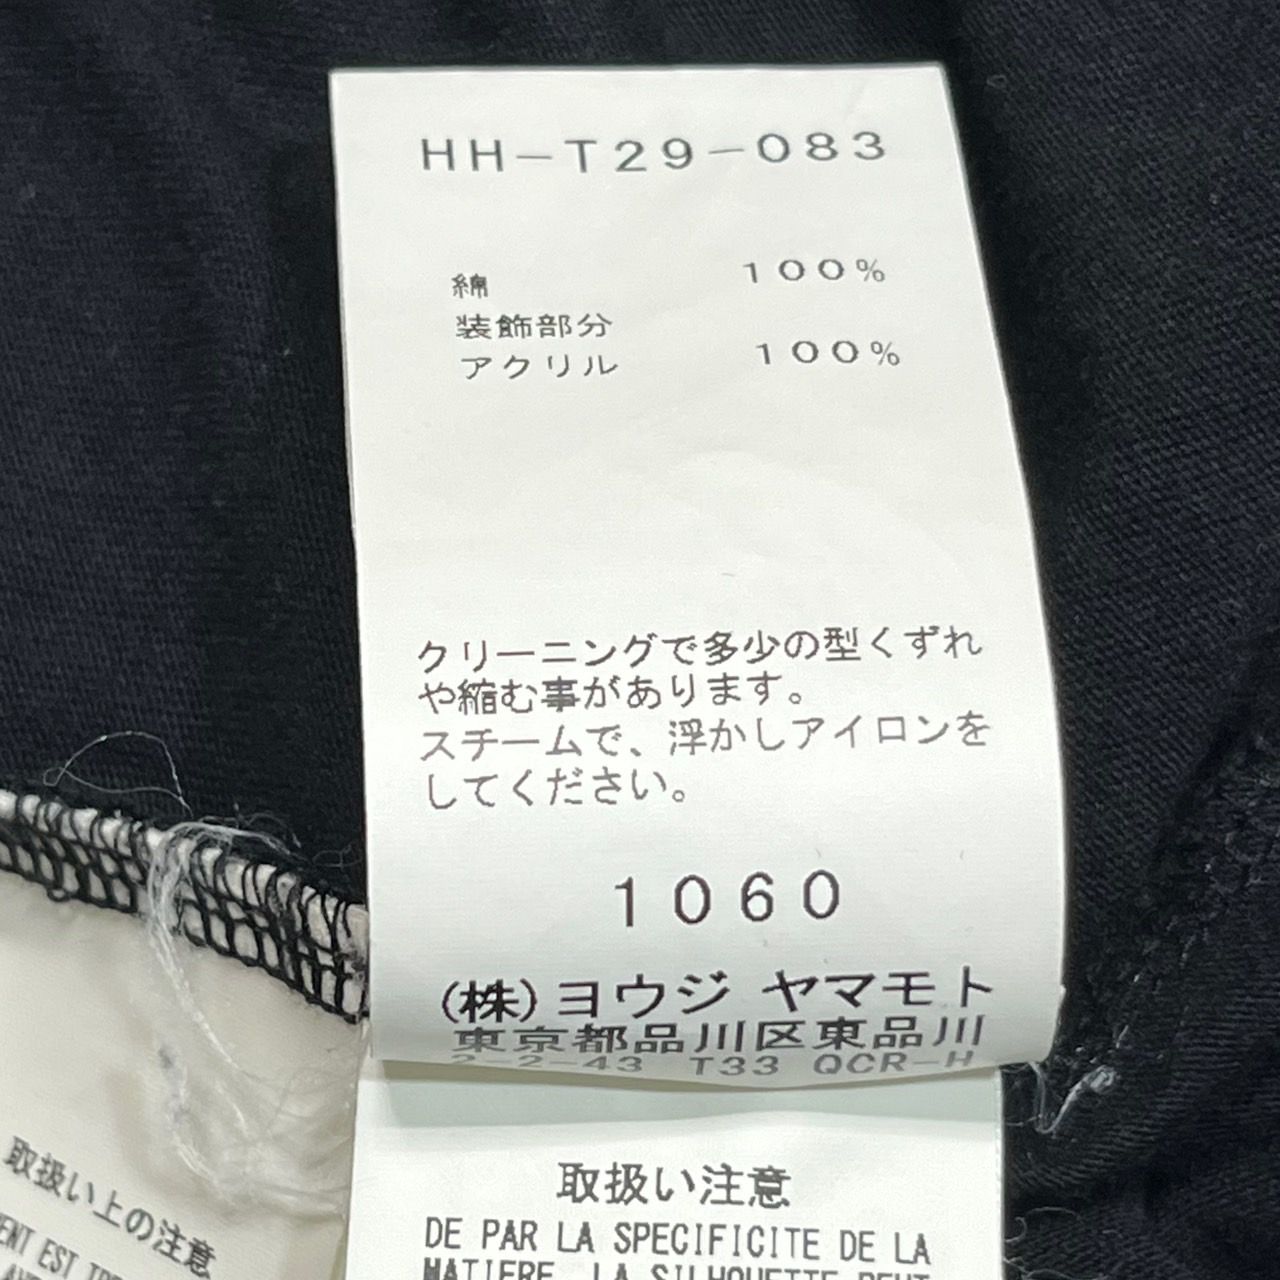 YOHJI YAMAMOTO POUR HOMME(ヨウジヤマモトプールオム) 19SS ヒモ通し丸首半/ Lace-up round neck  short sleeve T-shirt HH-T29-083 SIZE 3(L) ブラック